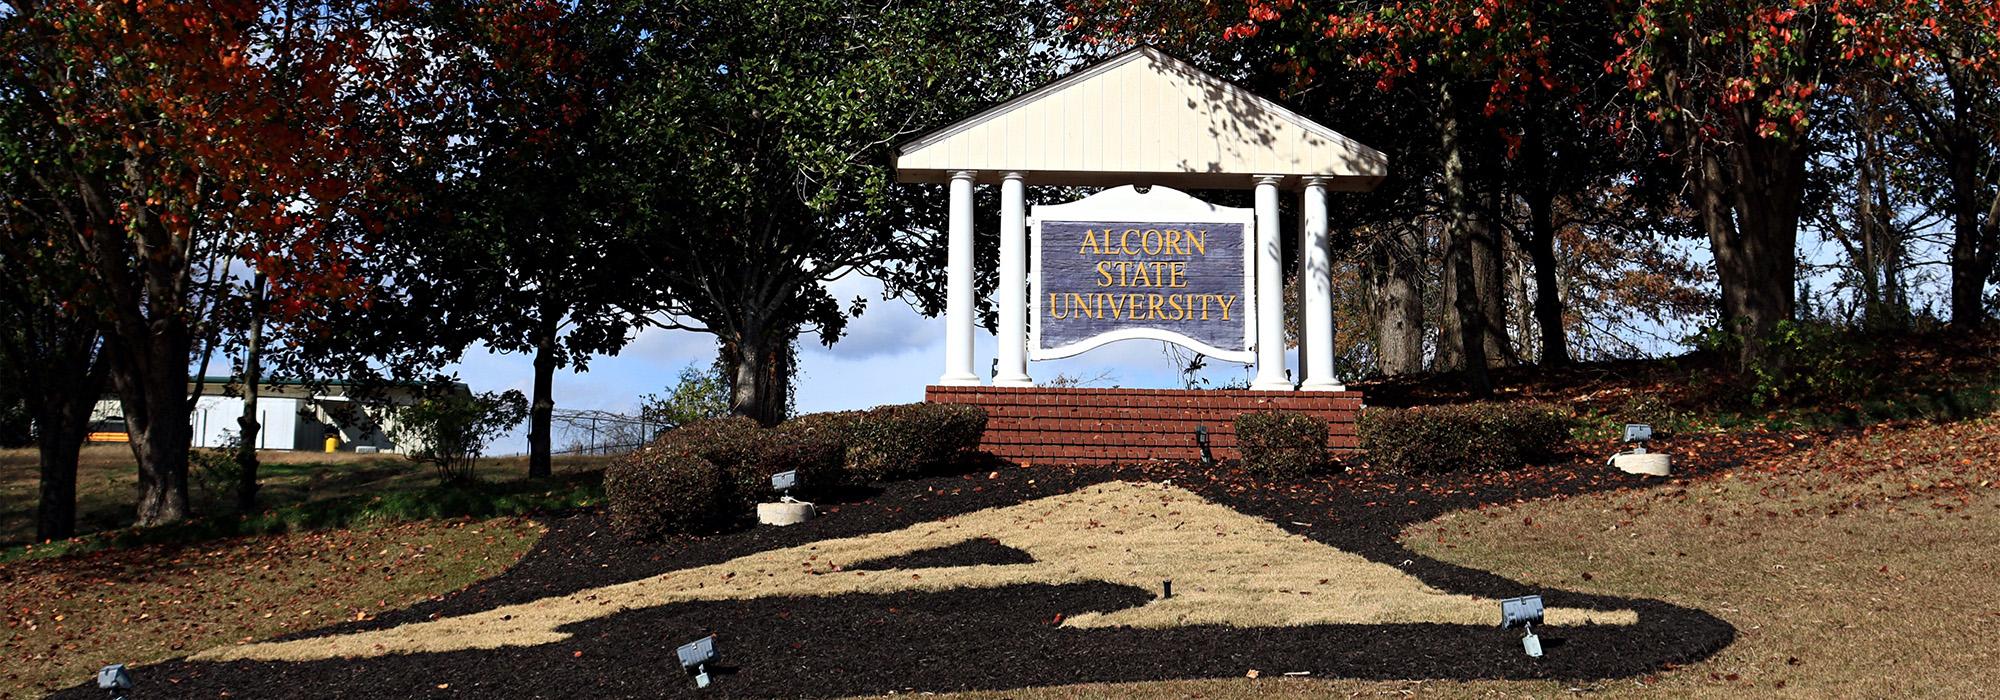 Alcorn State University, Alcorn, MS